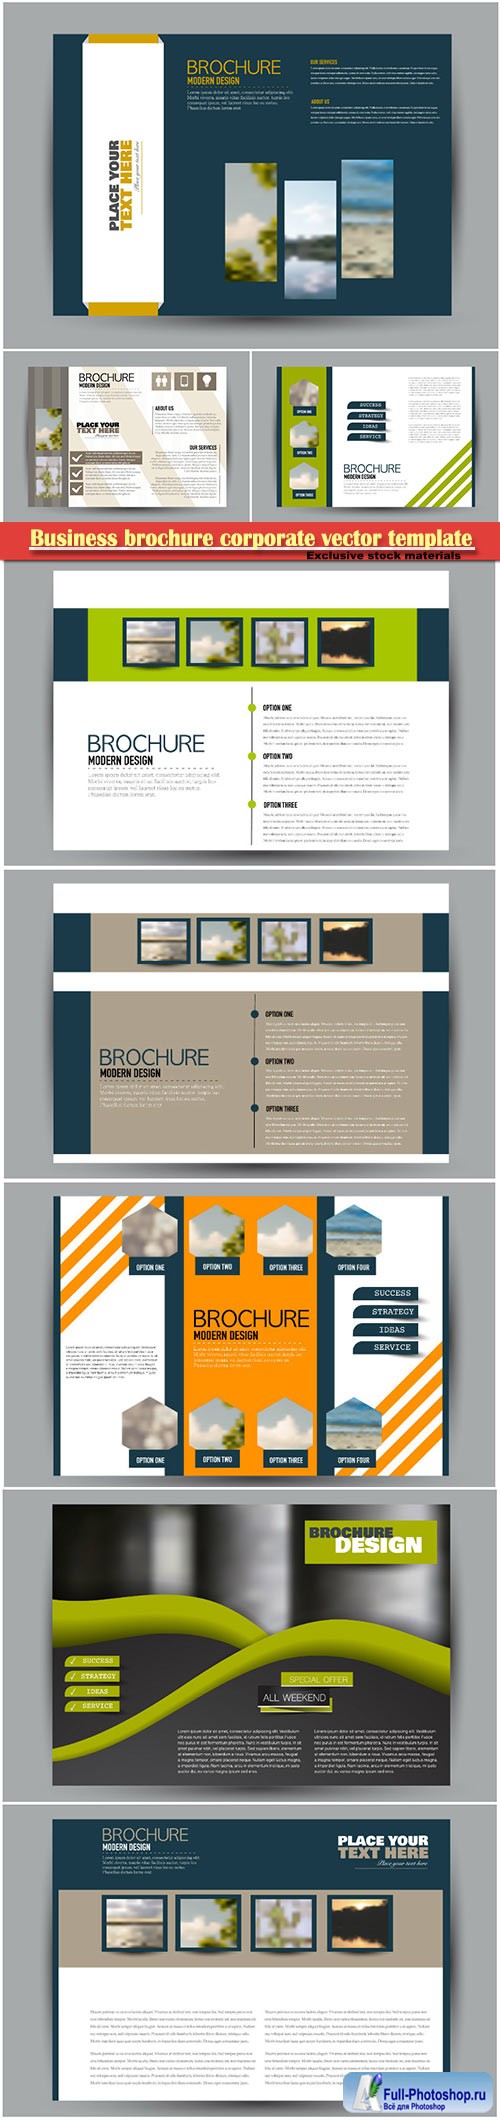 Business brochure corporate vector template, magazine flyer mockup # 17